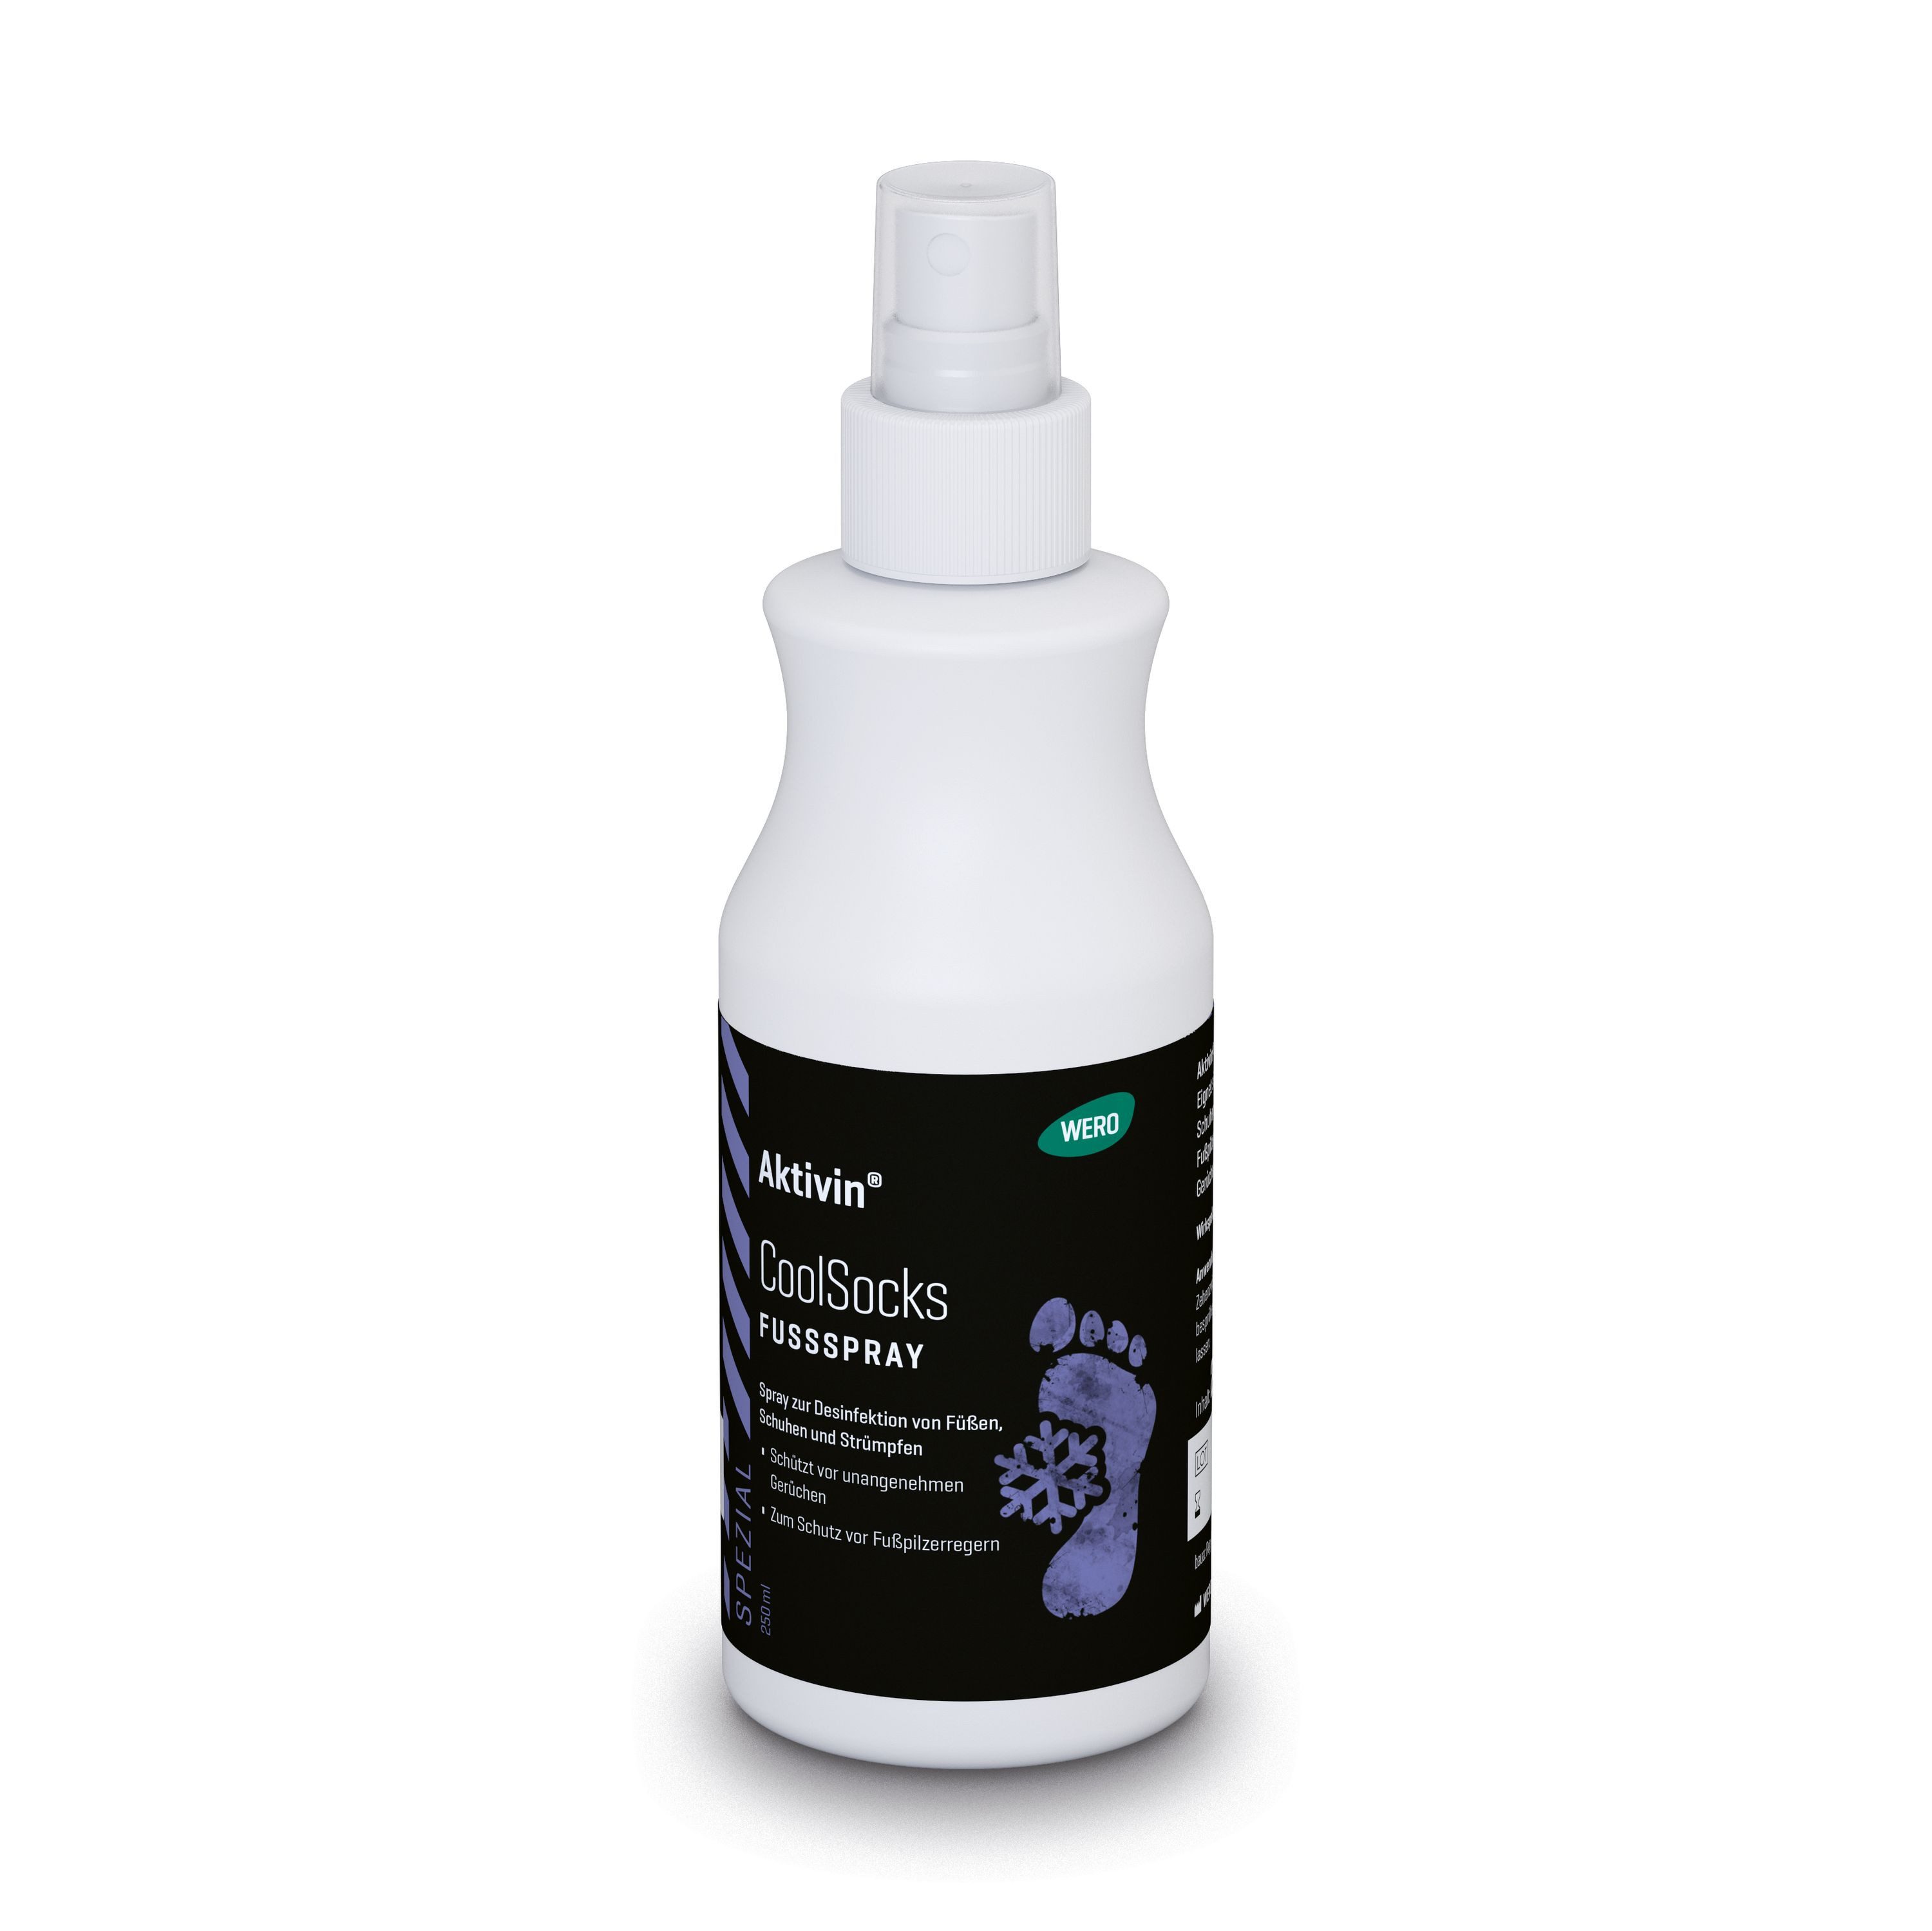 Aktivin® Fußspray CoolSocks Fußspray, 250 ml Sprühflasche